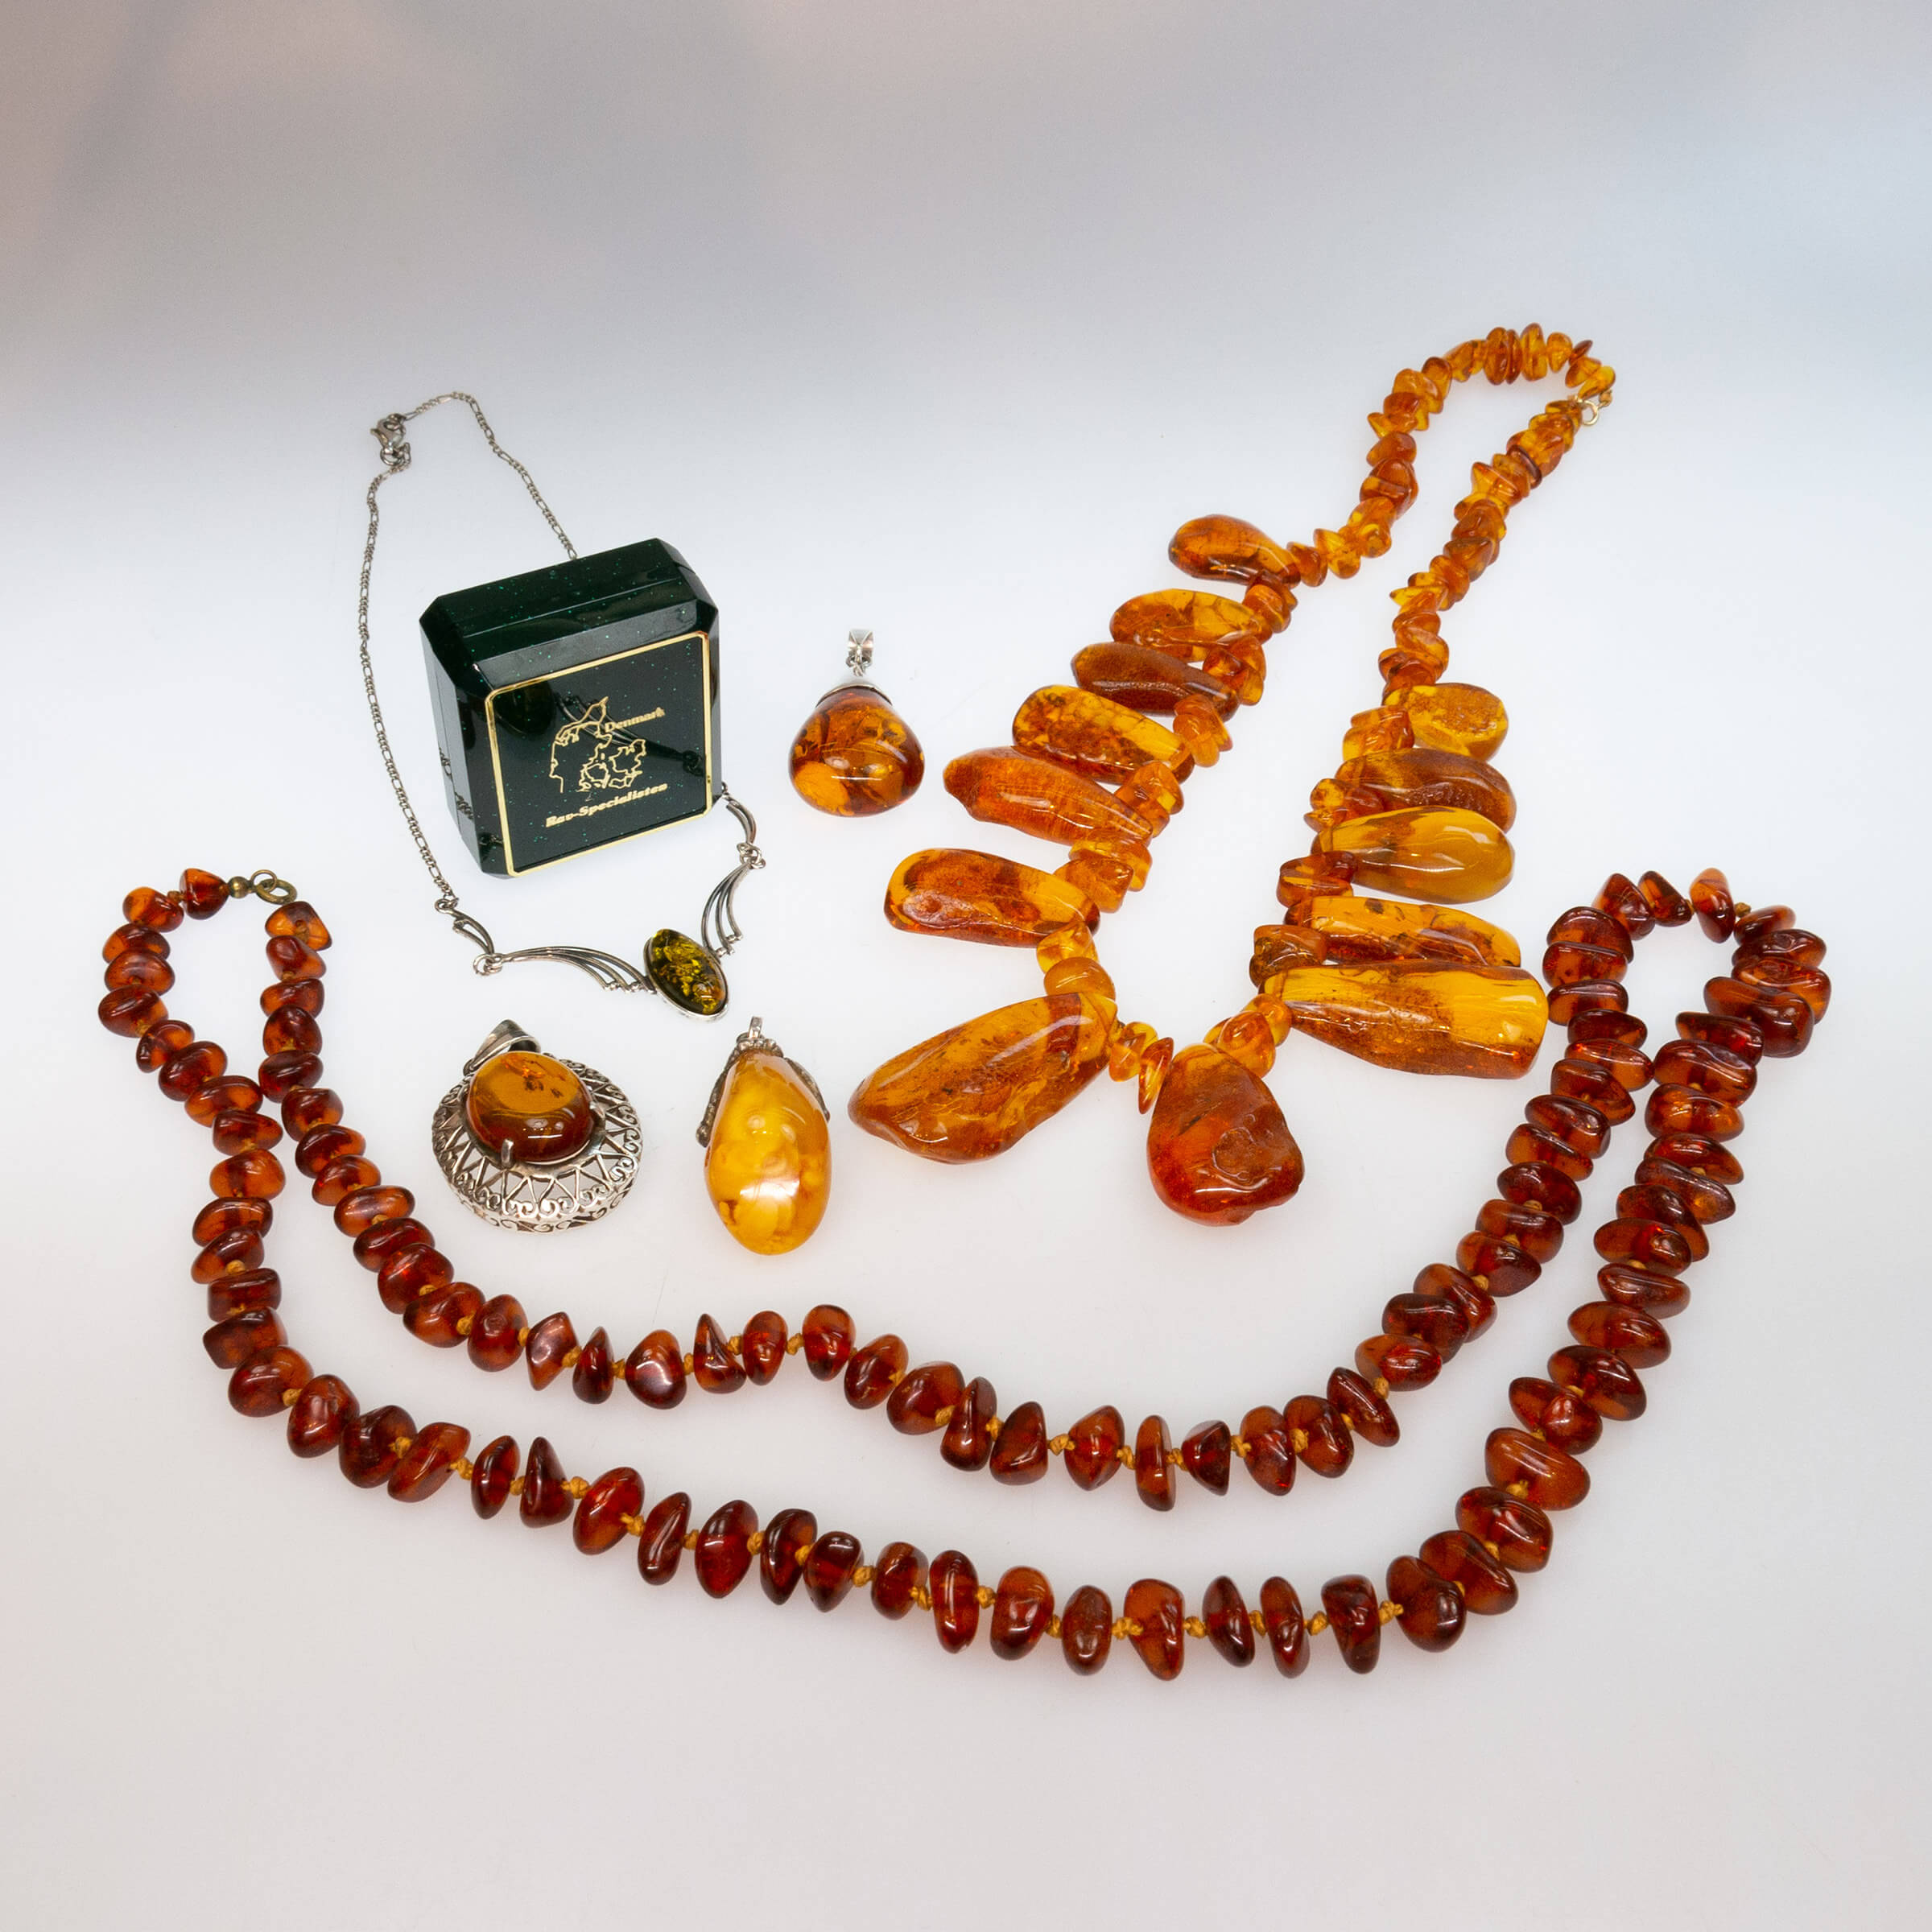 Small Quantity Of Amber Jewellery